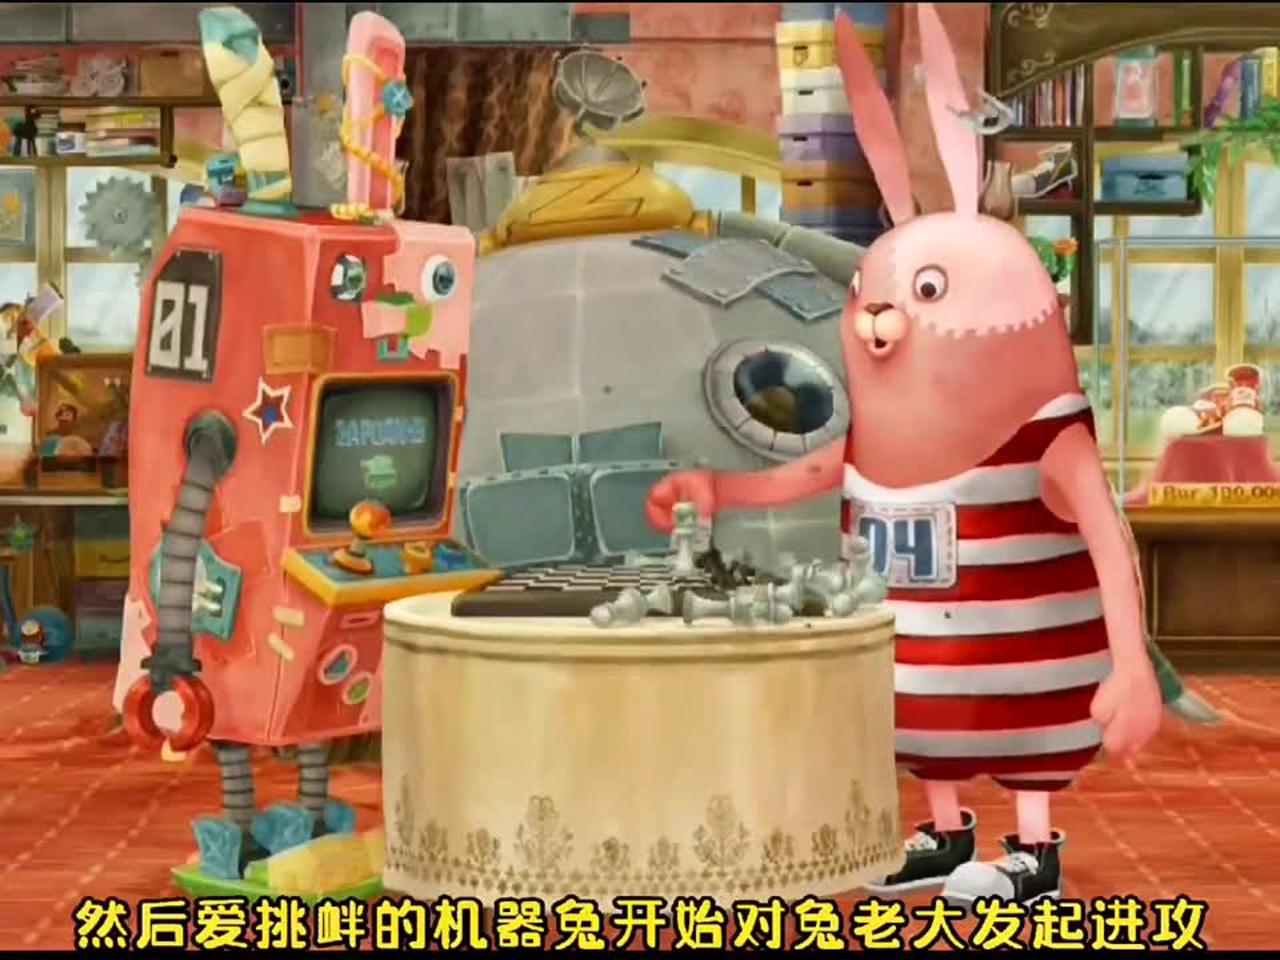 Prison Rabbit Season 4, A Series of Funny Acts of Robot Rabbit # Prison Rabbit